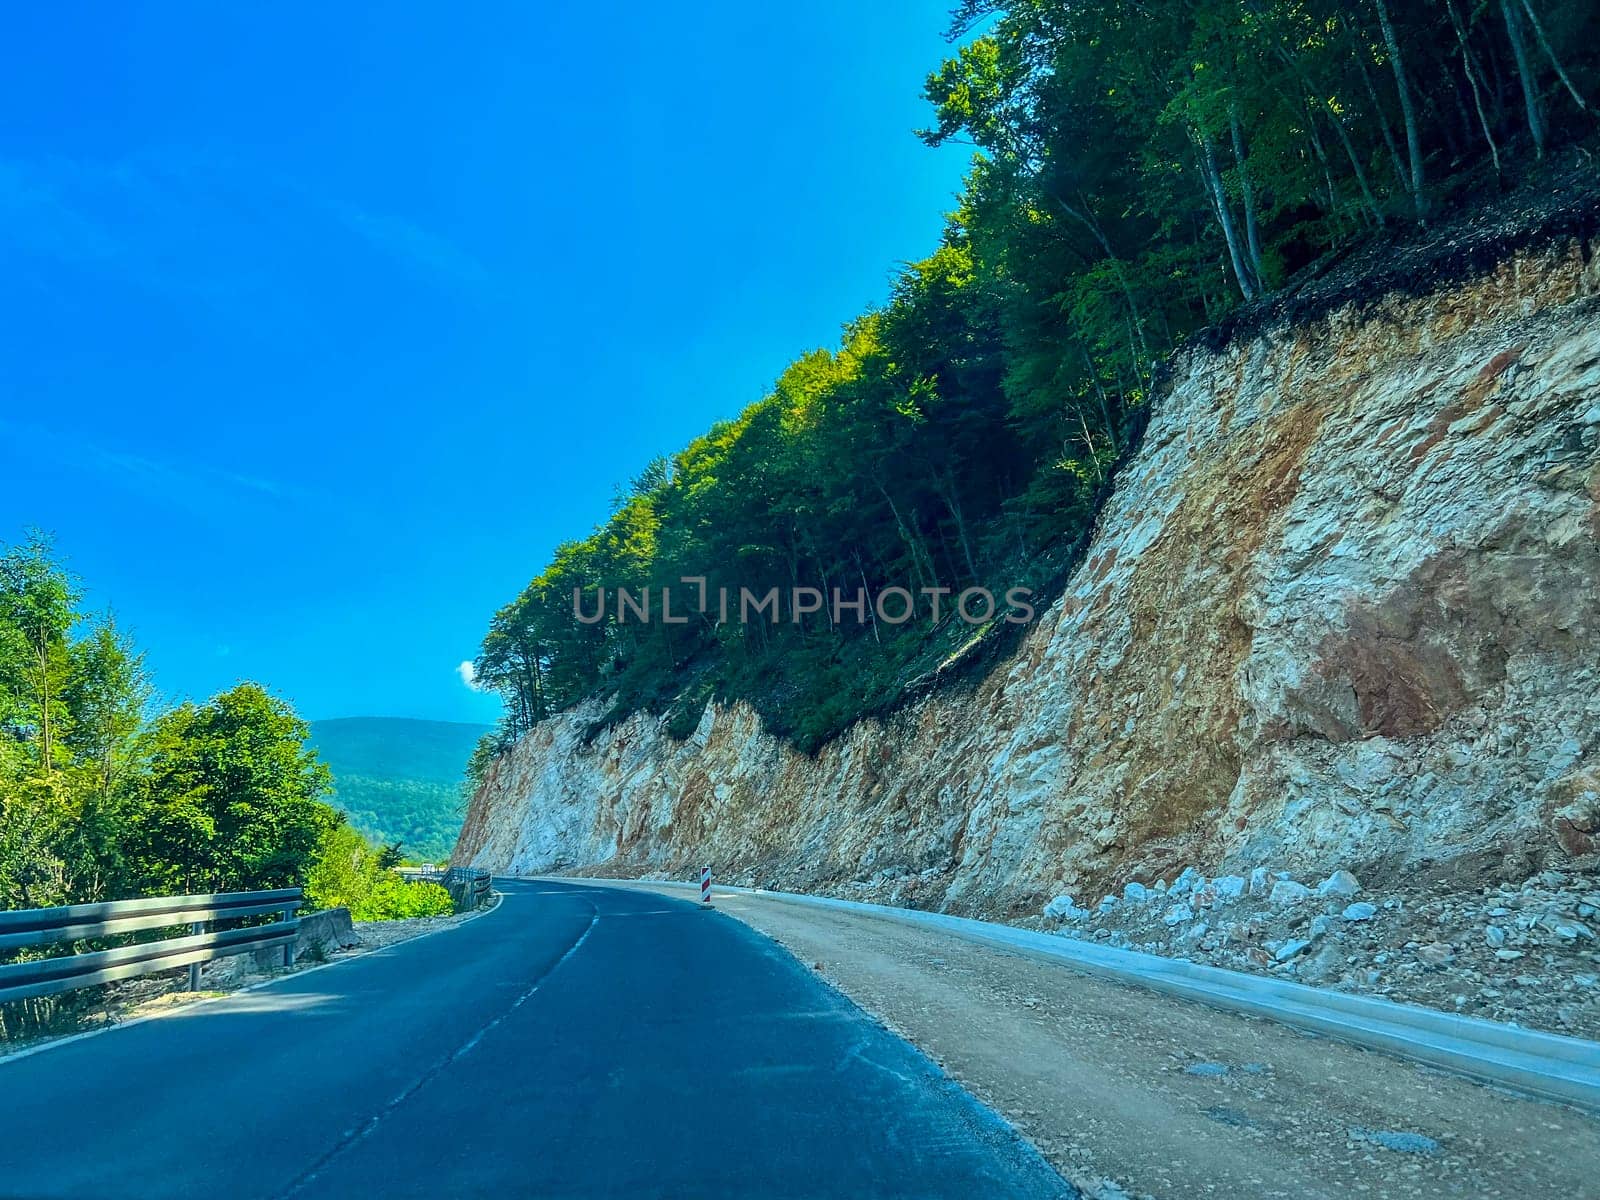 Rocky slope of the road, roadside erosion, road in the rock, Bosnia, photo